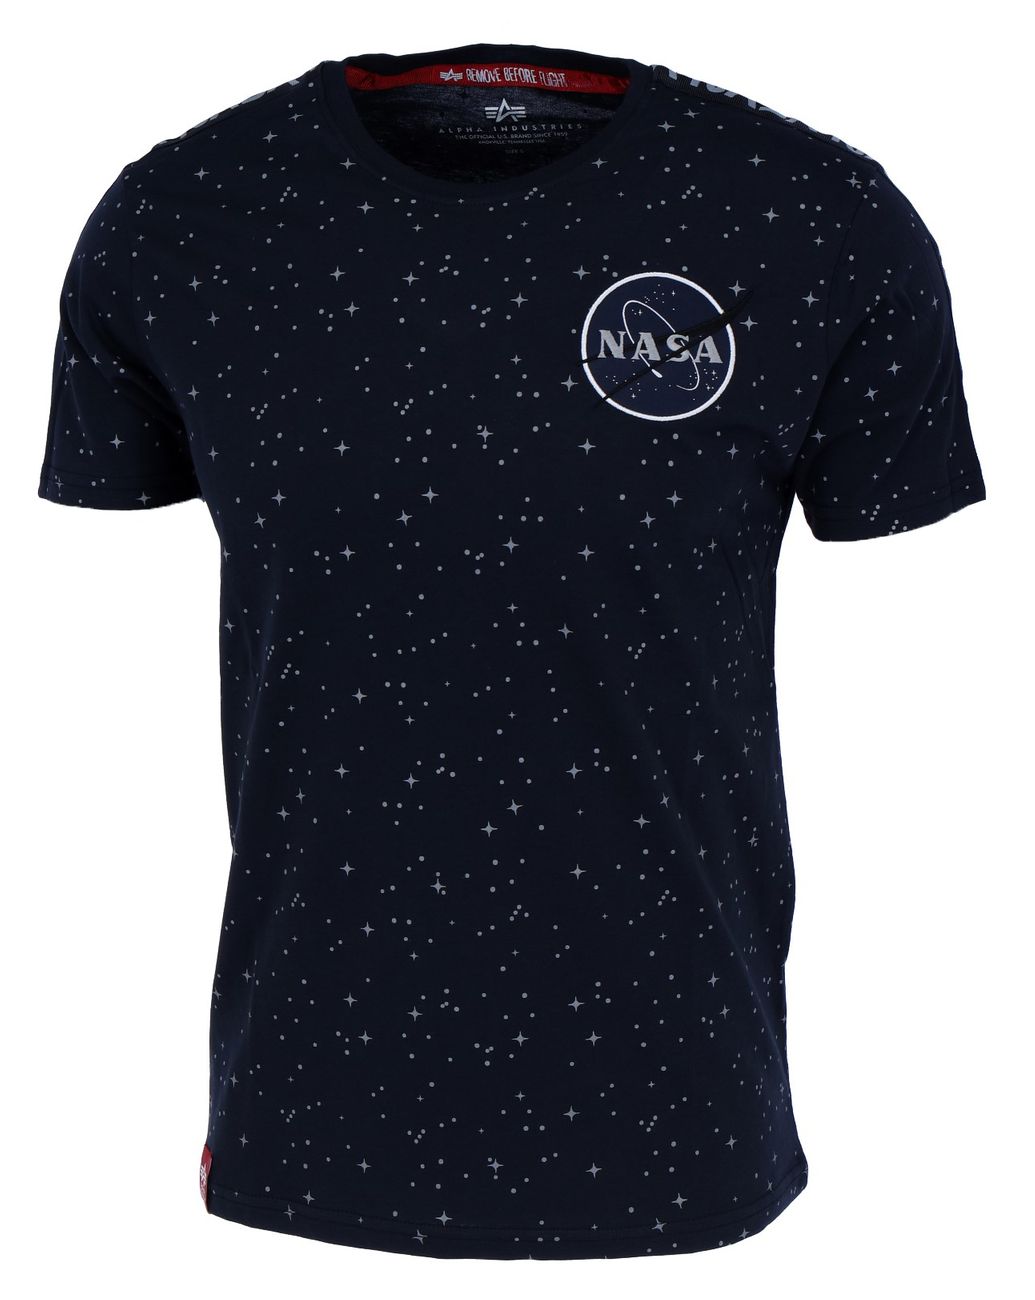 ALPHA INDUSTRIES NASA TAPE T Herren T-Shirt